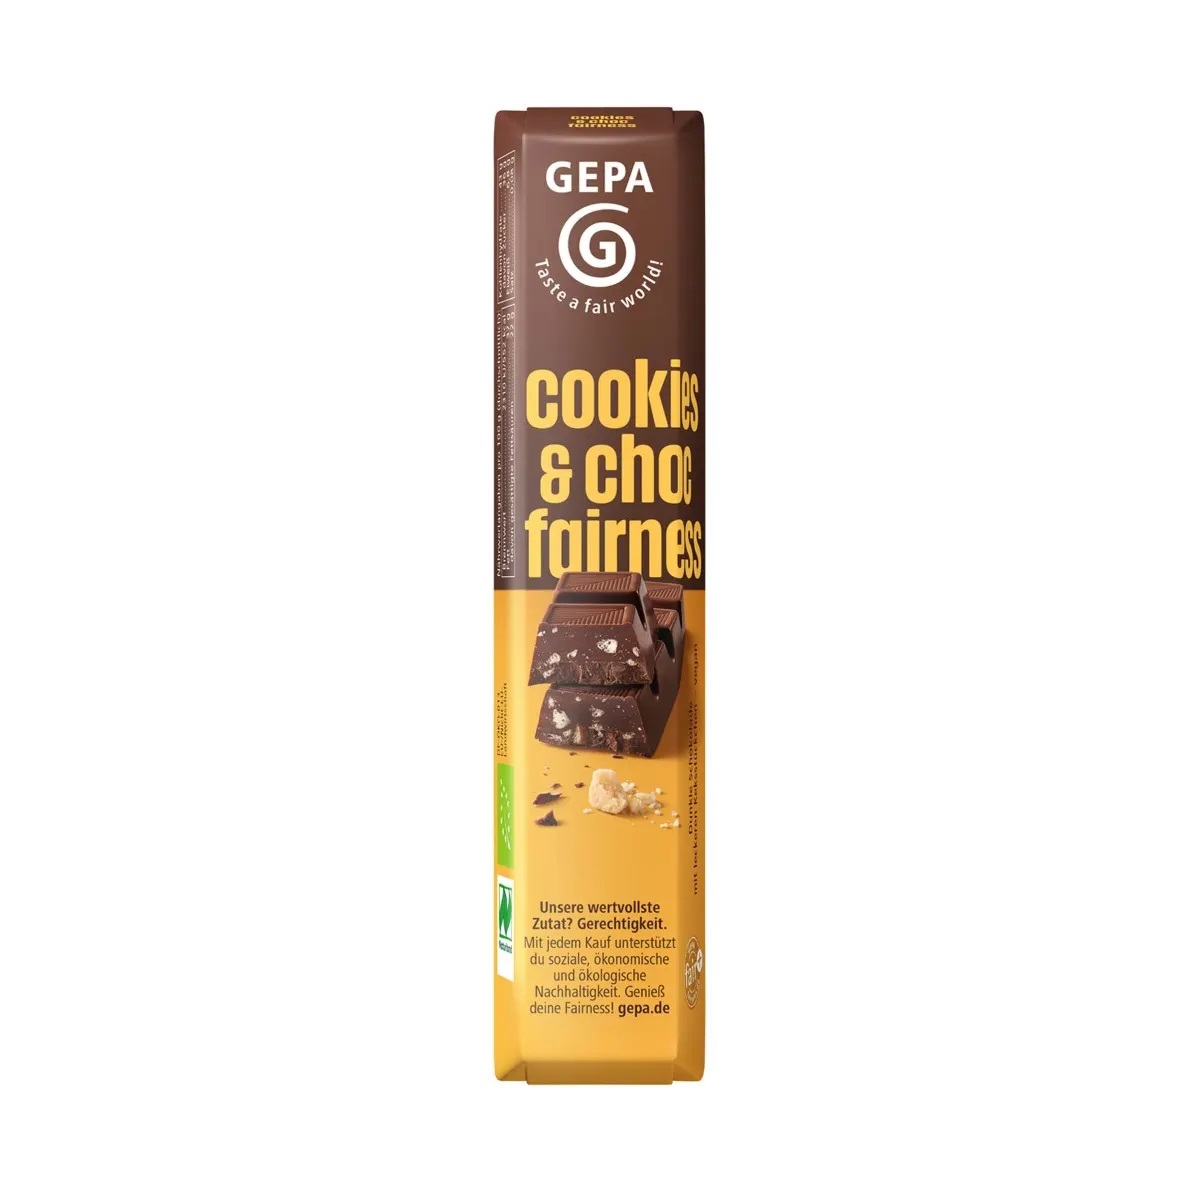 Fairness cookies & choc vegan, 45 g, BIO Naturland zertifiziert